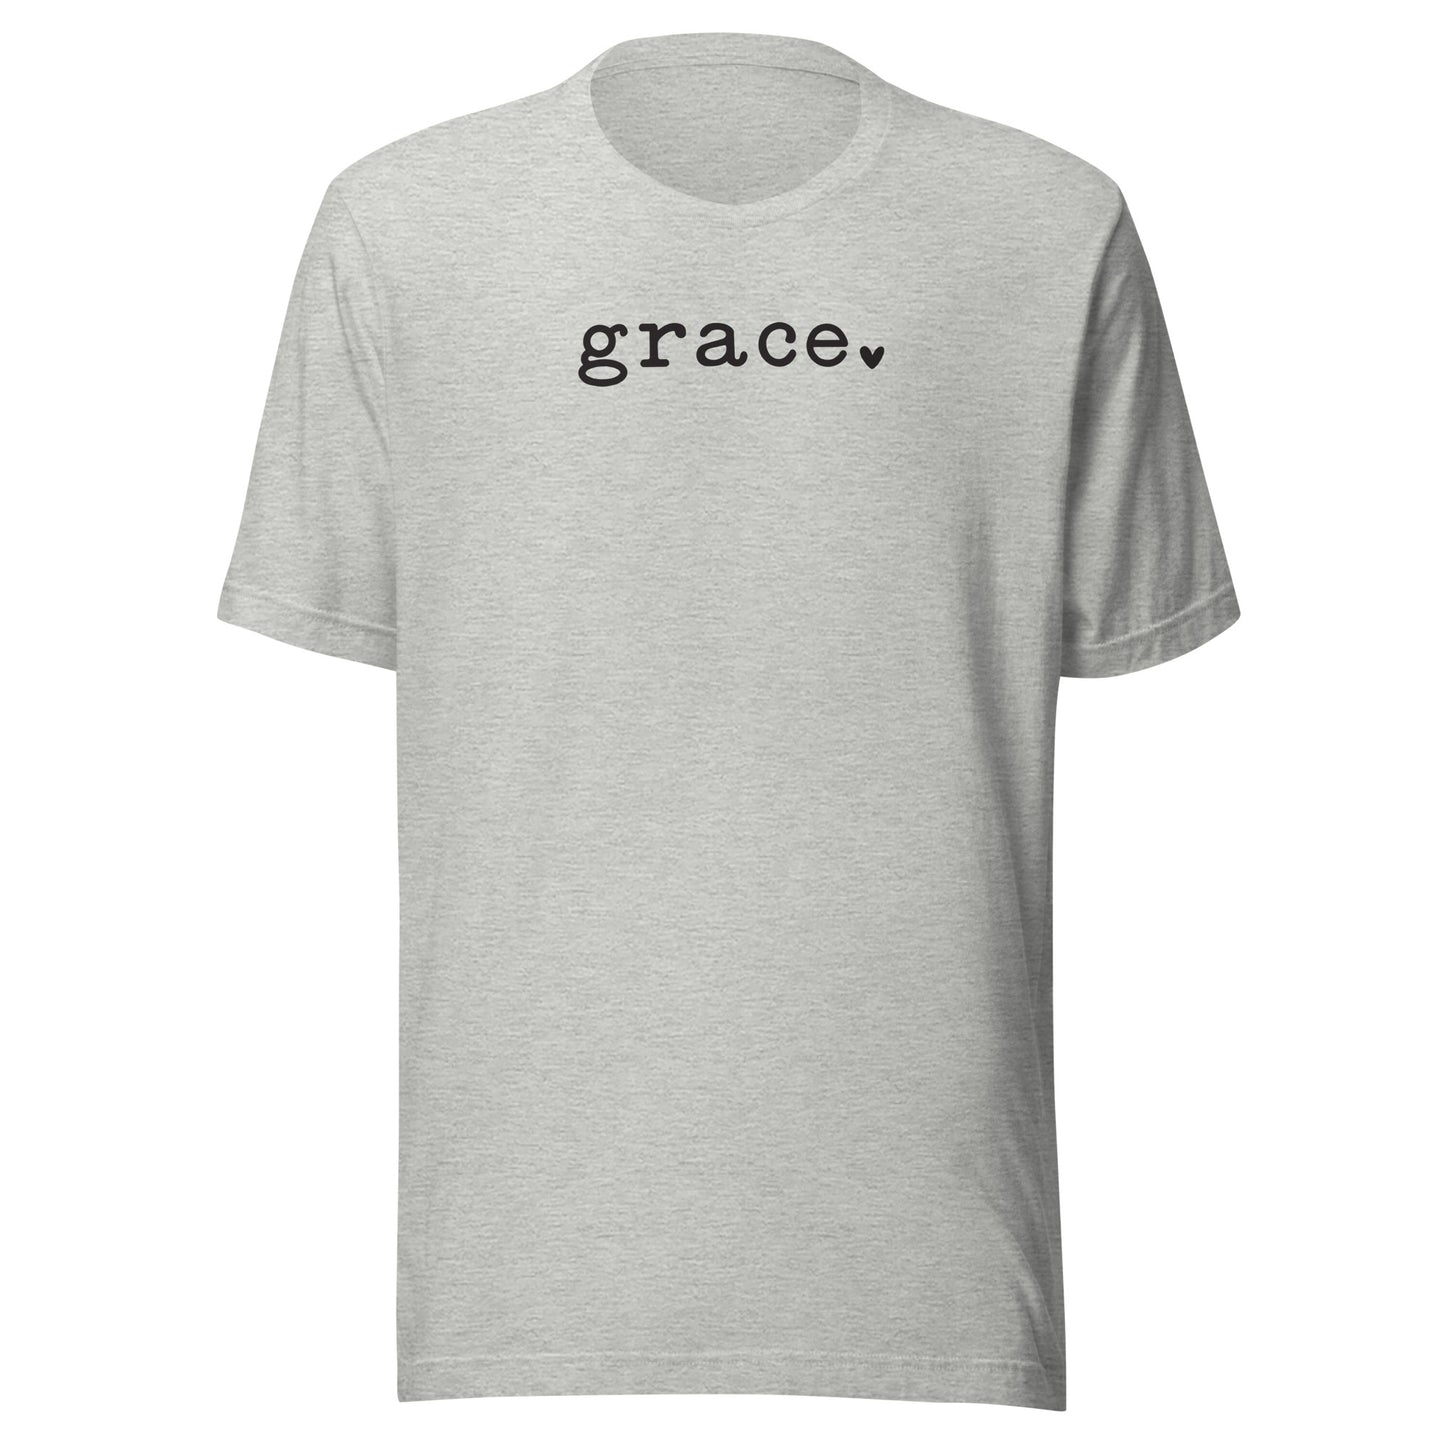 The Grace T-Shirt - Share Your Faith Through Fashion